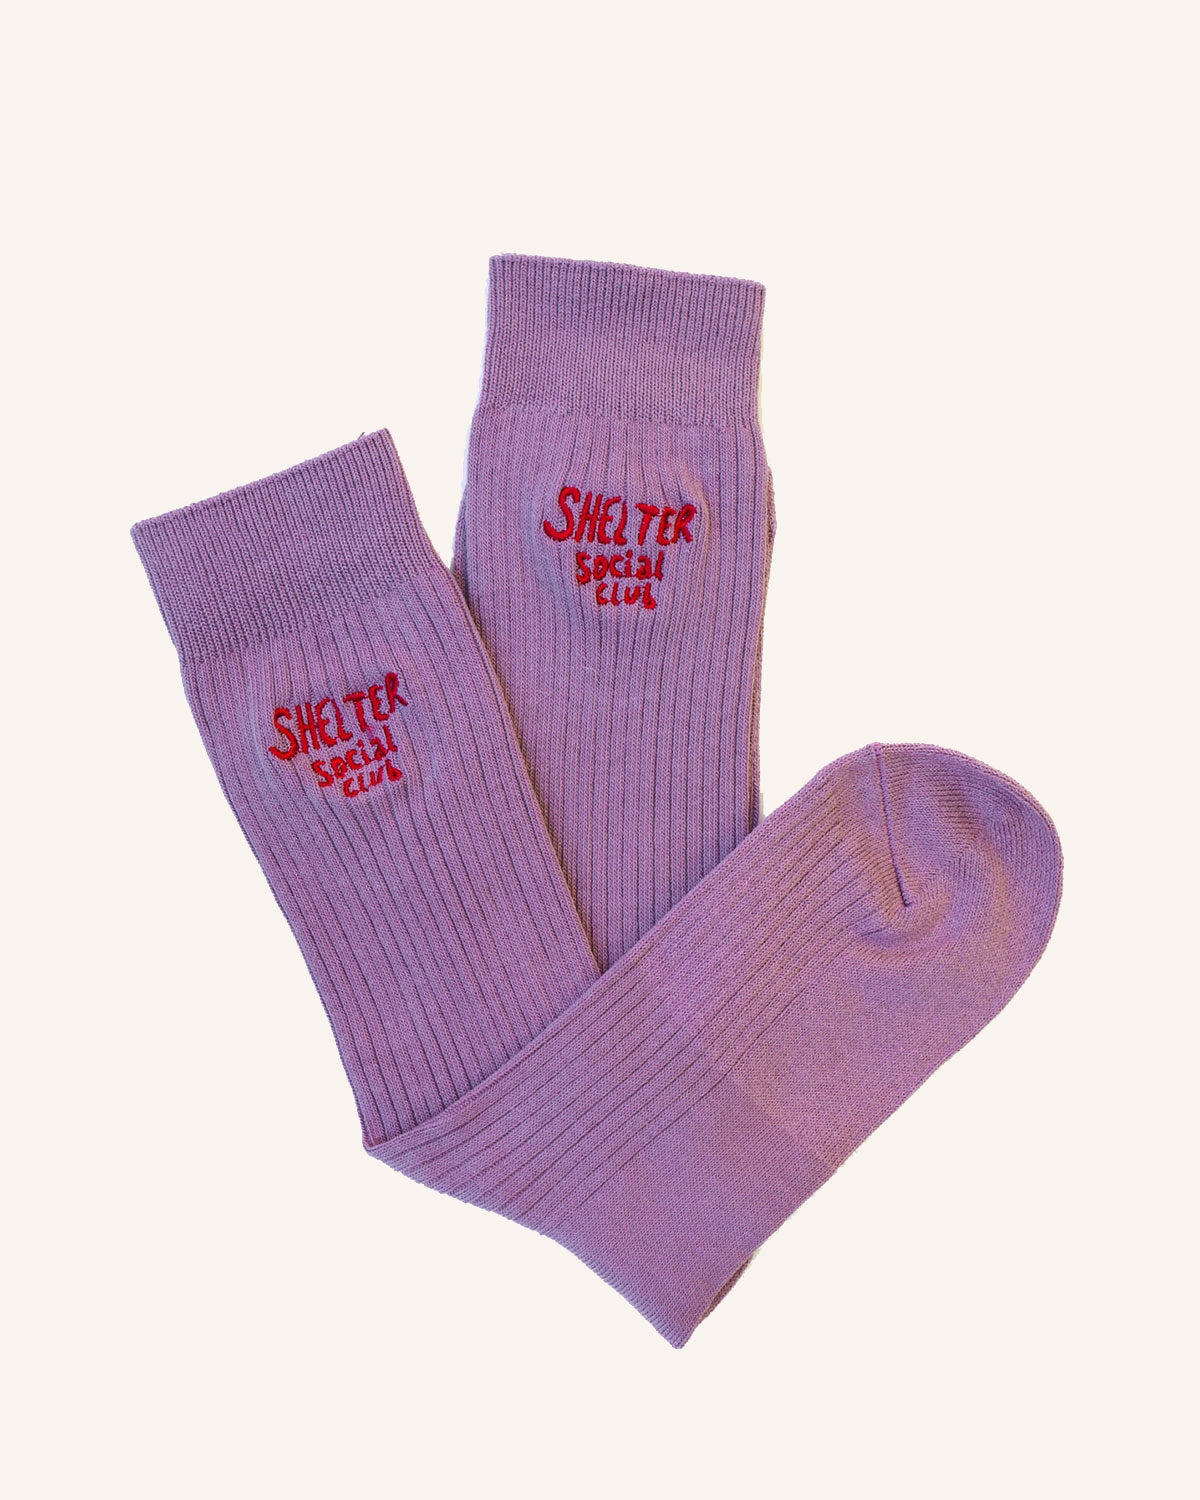 SSC Everyday Socks - Shelter Social Club